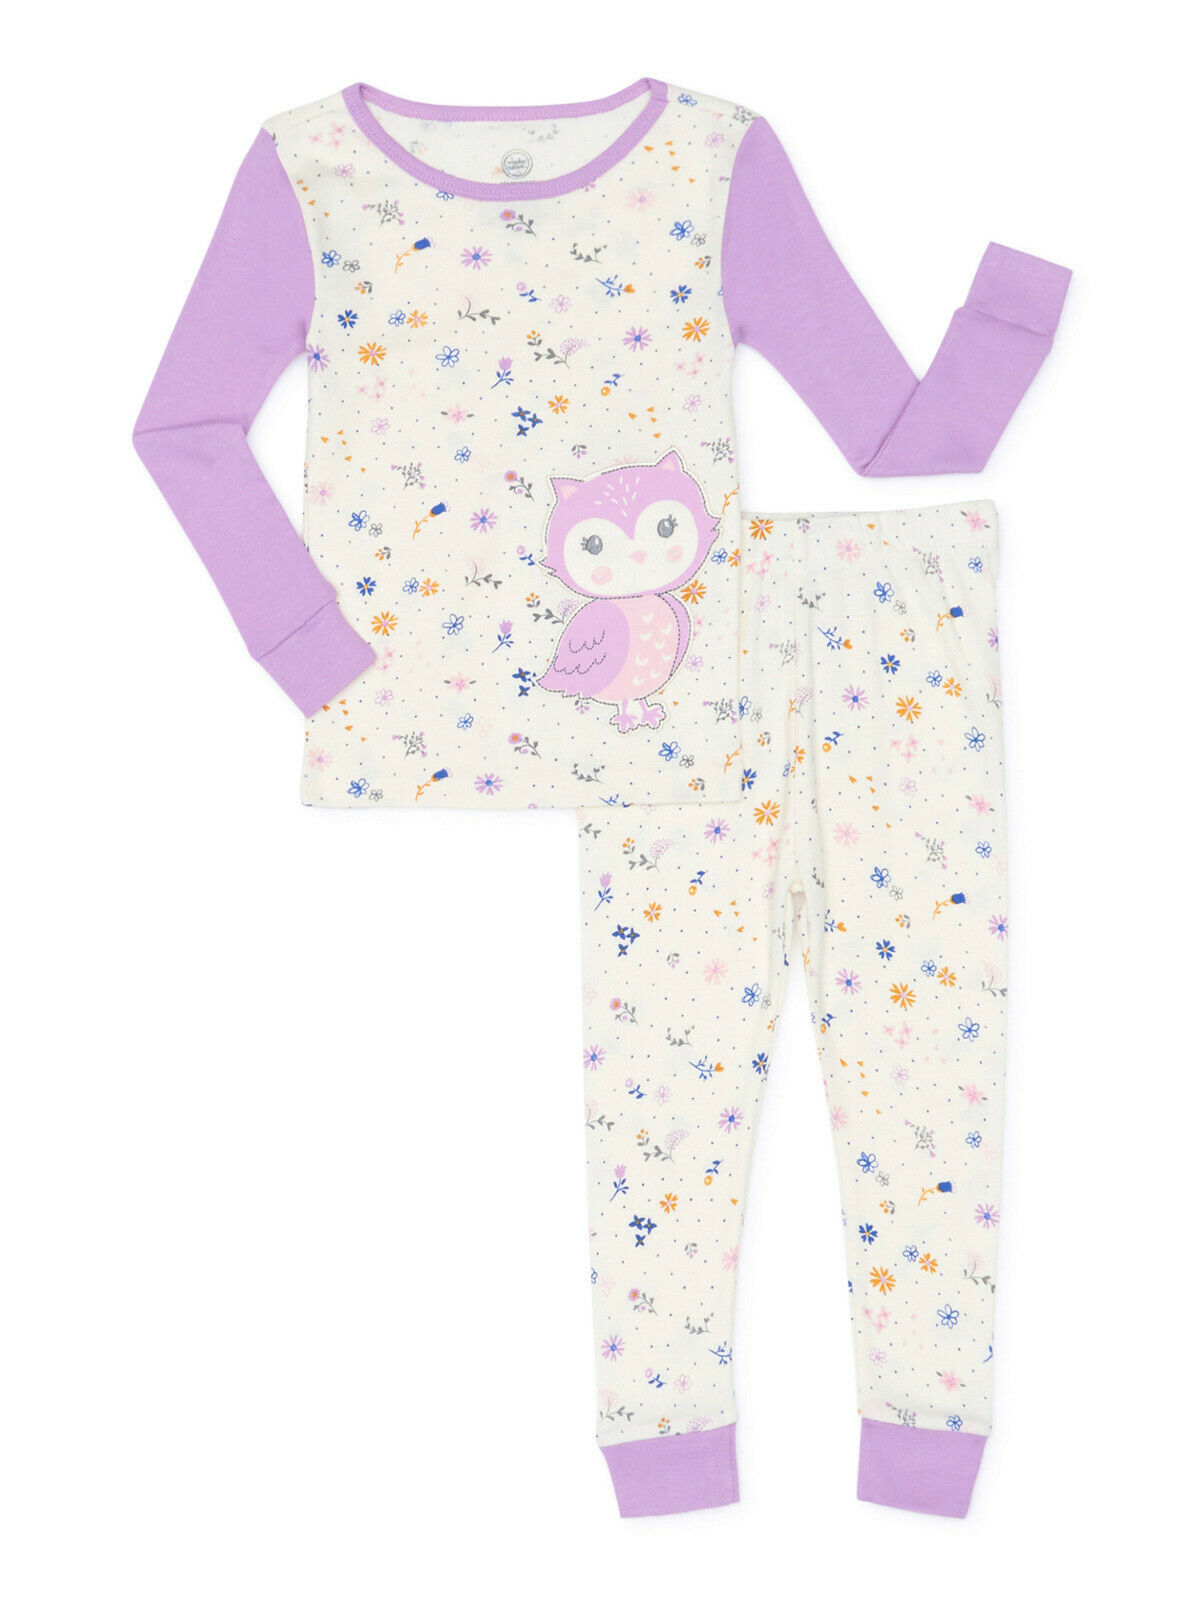 Toddler Girls' Cotton Sleep Set, 2 Piece Pajamas Purple Owl Size 2T 4T